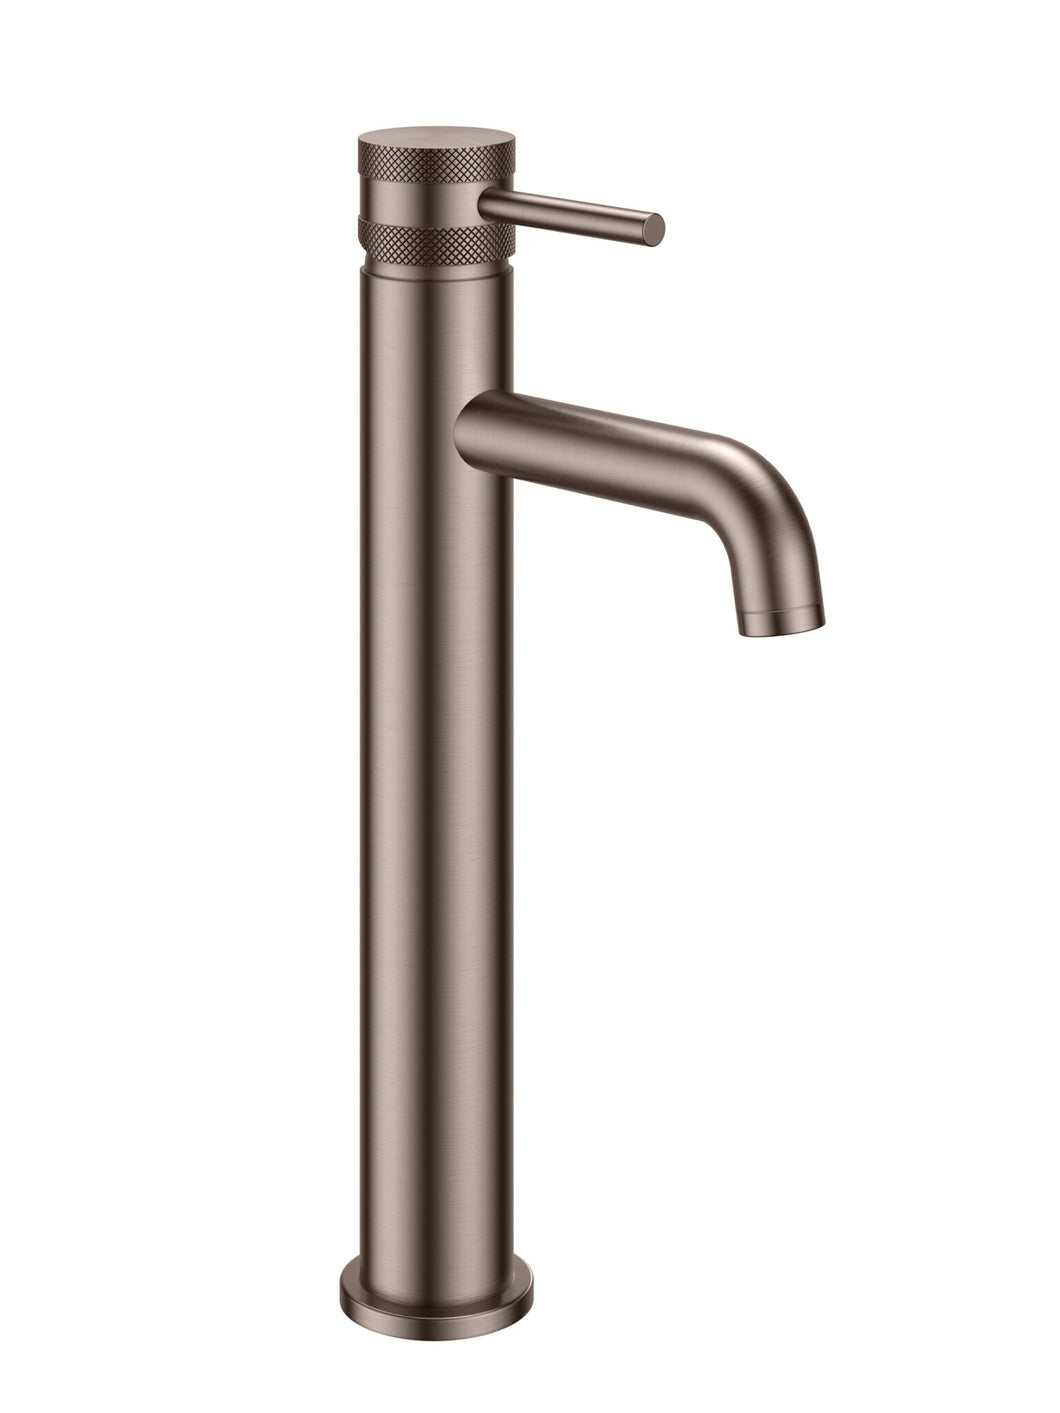 Desire Bathroom Knurled Tall Mono Bowl Mixer Taps  - Brushed Bronze